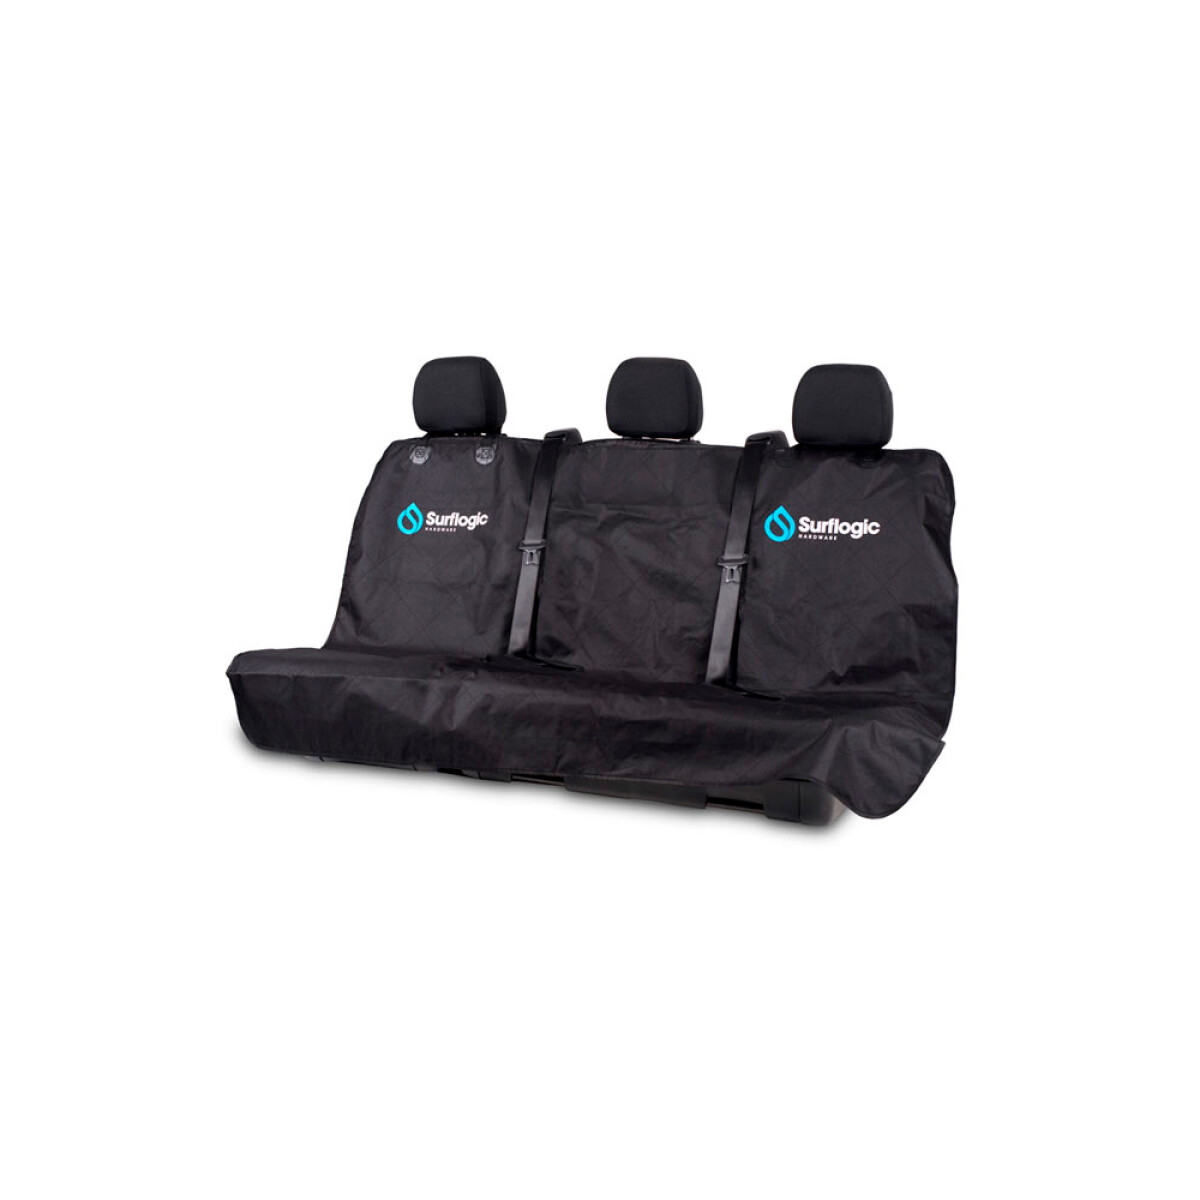 Surflogic Car Seat Cover Triple Universal 